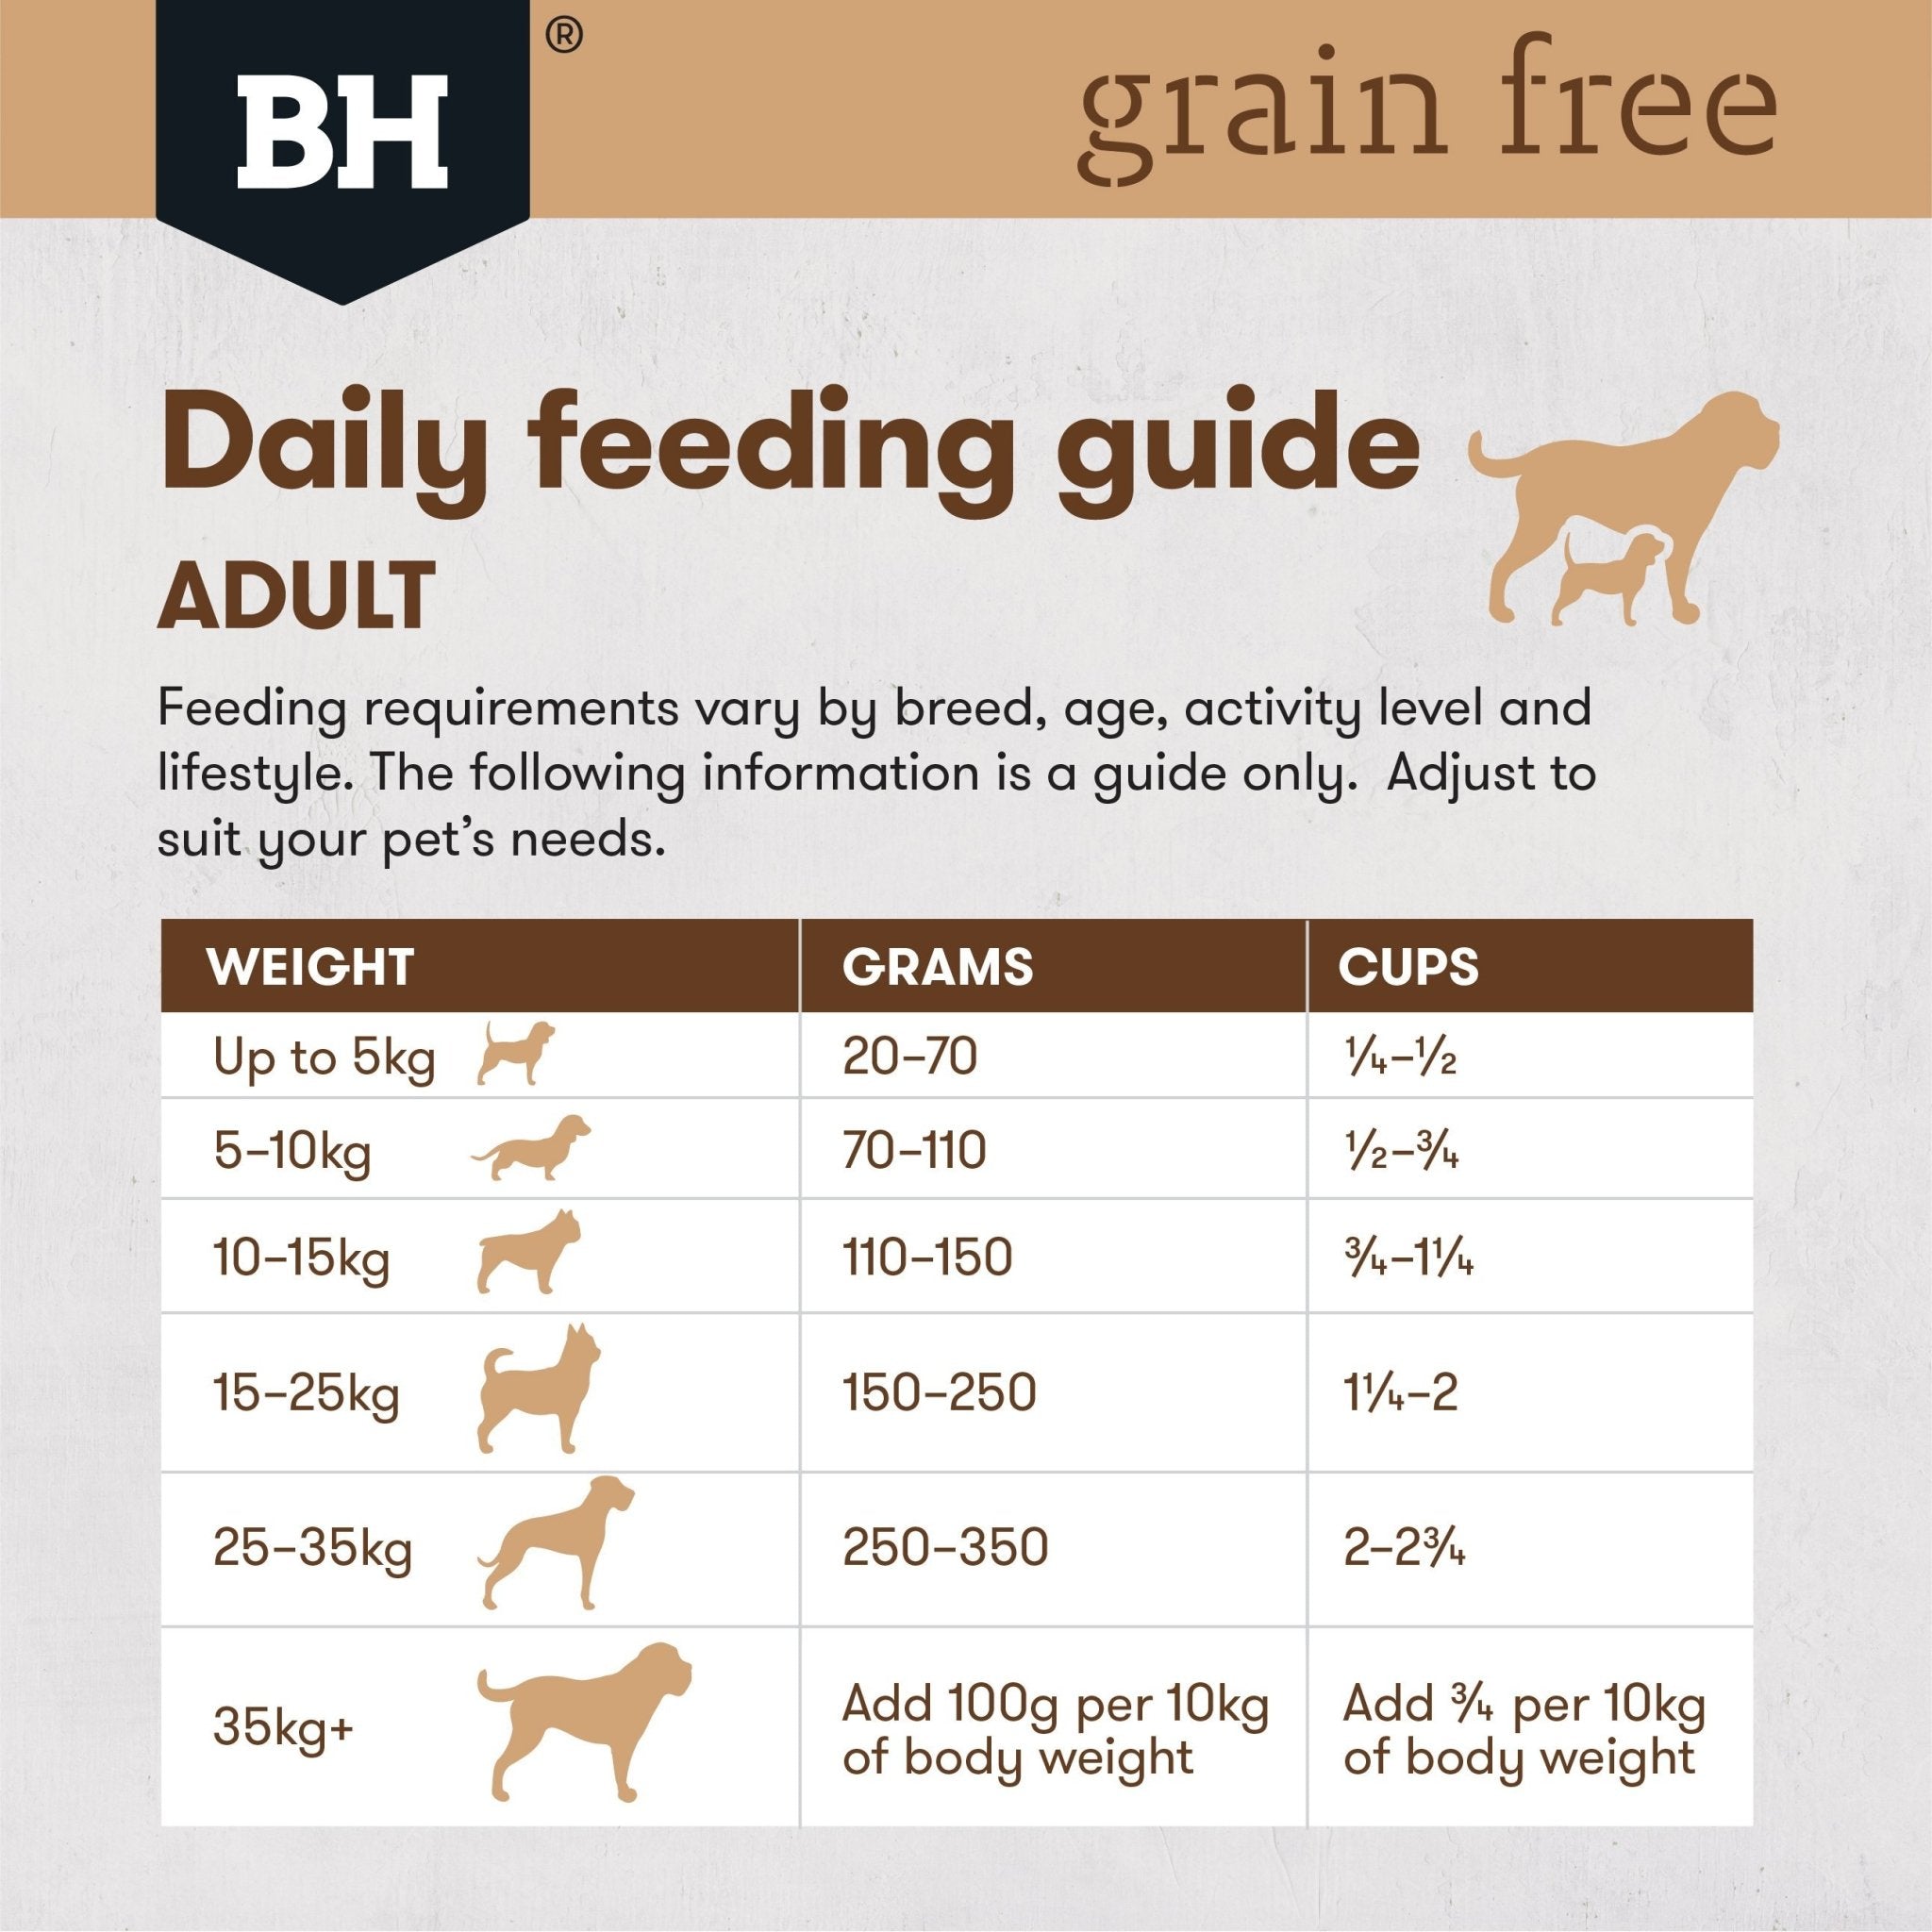 Black Hawk Grain Free Adult Chicken Dry Dog Food